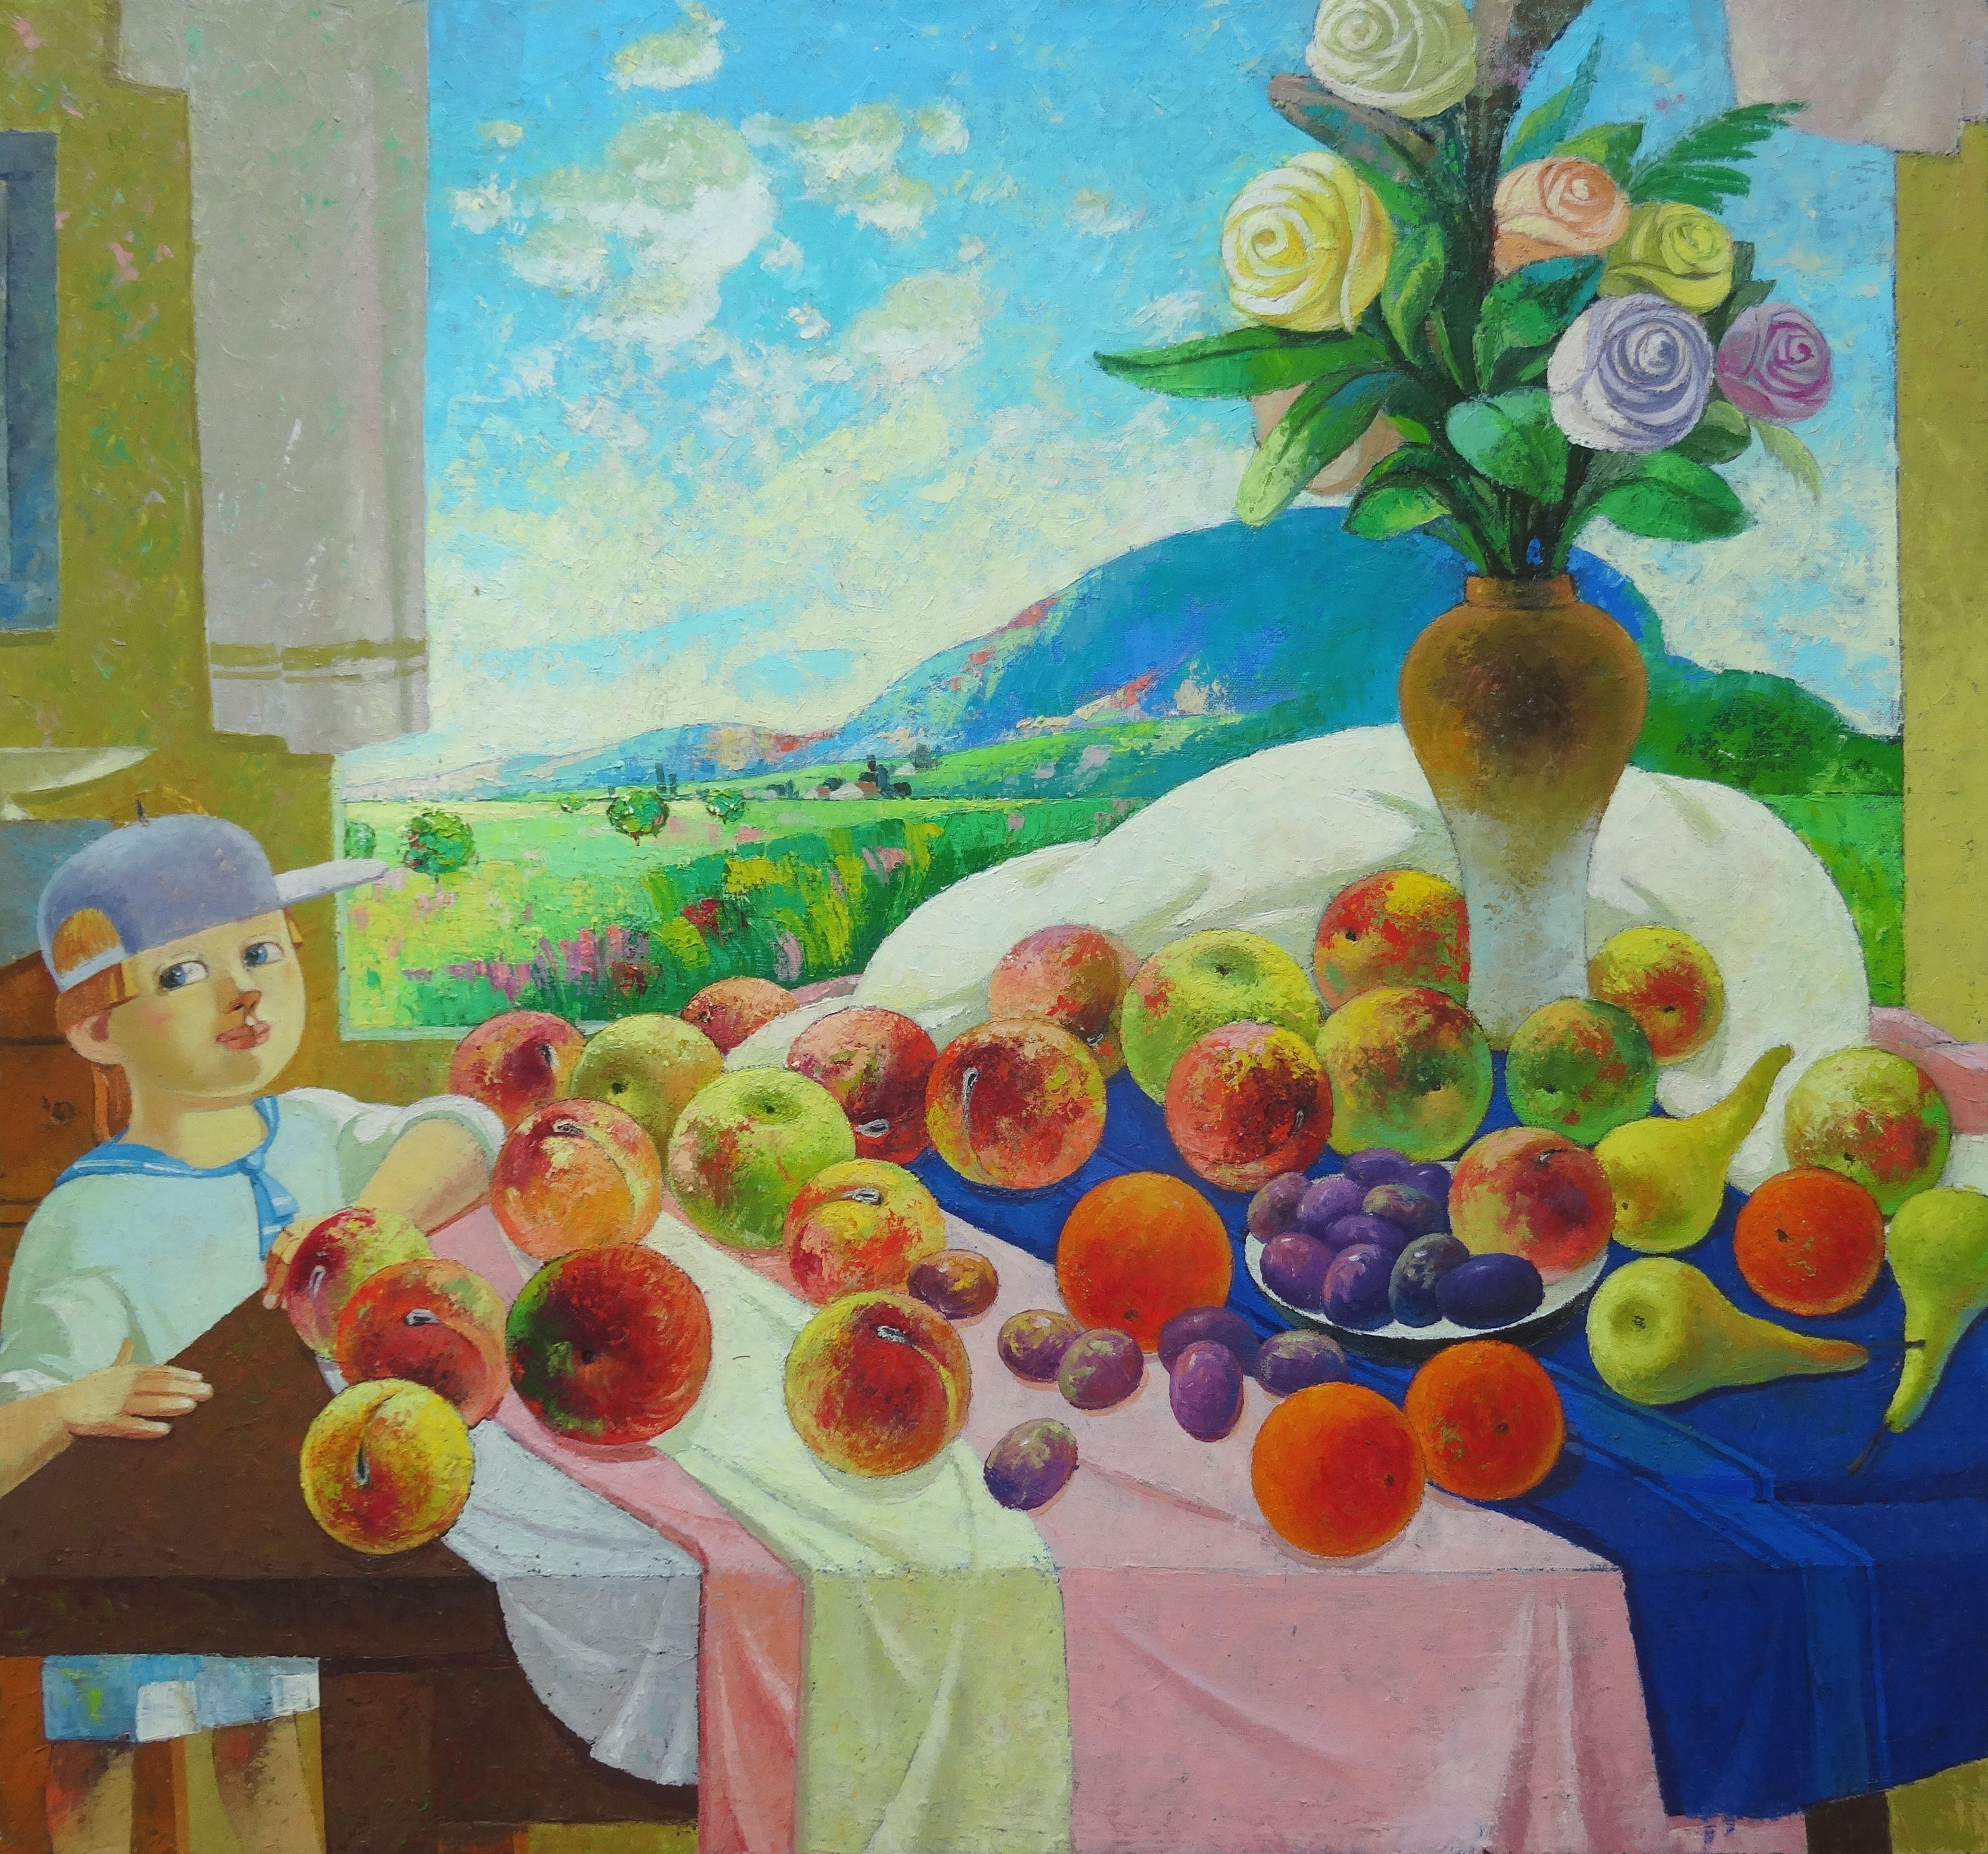 Figurative Painting Nugzar Kakhiani (Kahiani) - Nature morte lumineuse avec fruits et vase. 2020. Peinture à l'huile sur toile, 70 x75 cm